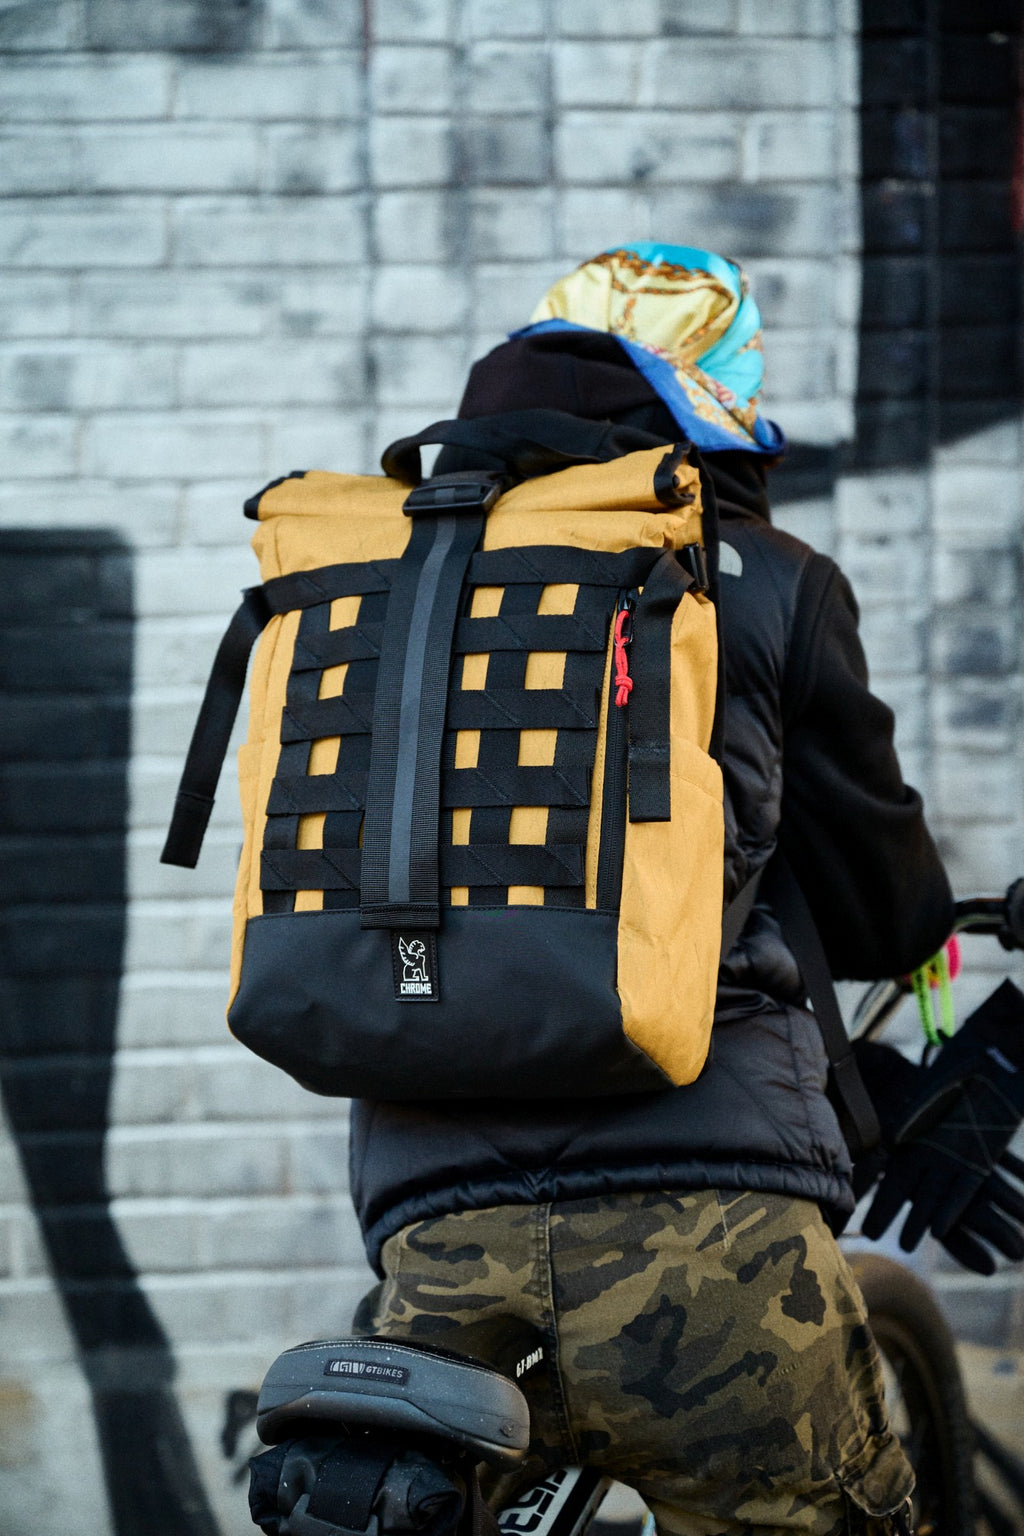 Chrome Barrage 18L backpack